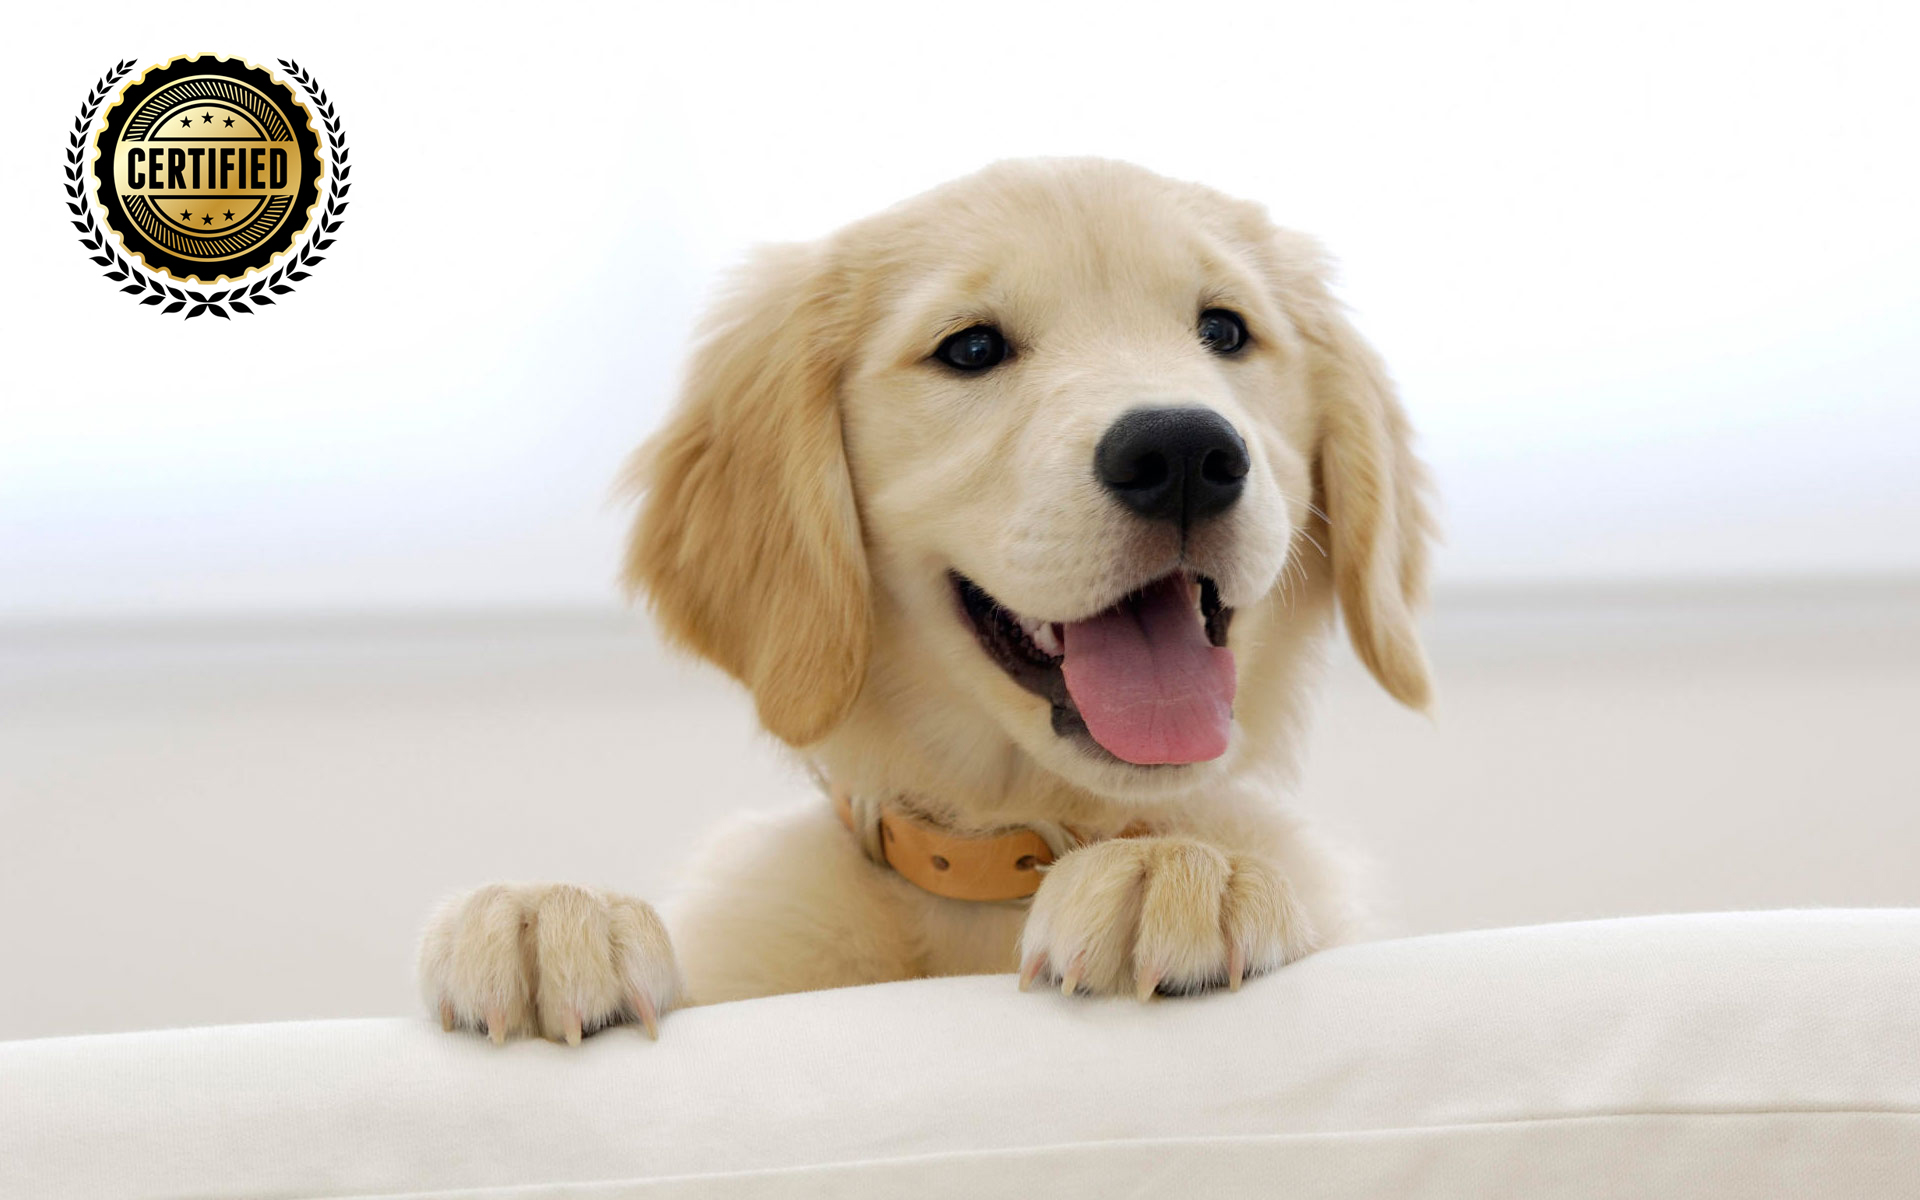 782504-Cute-Dog-Wallpaper Copy - The Sydney Dog Trainer